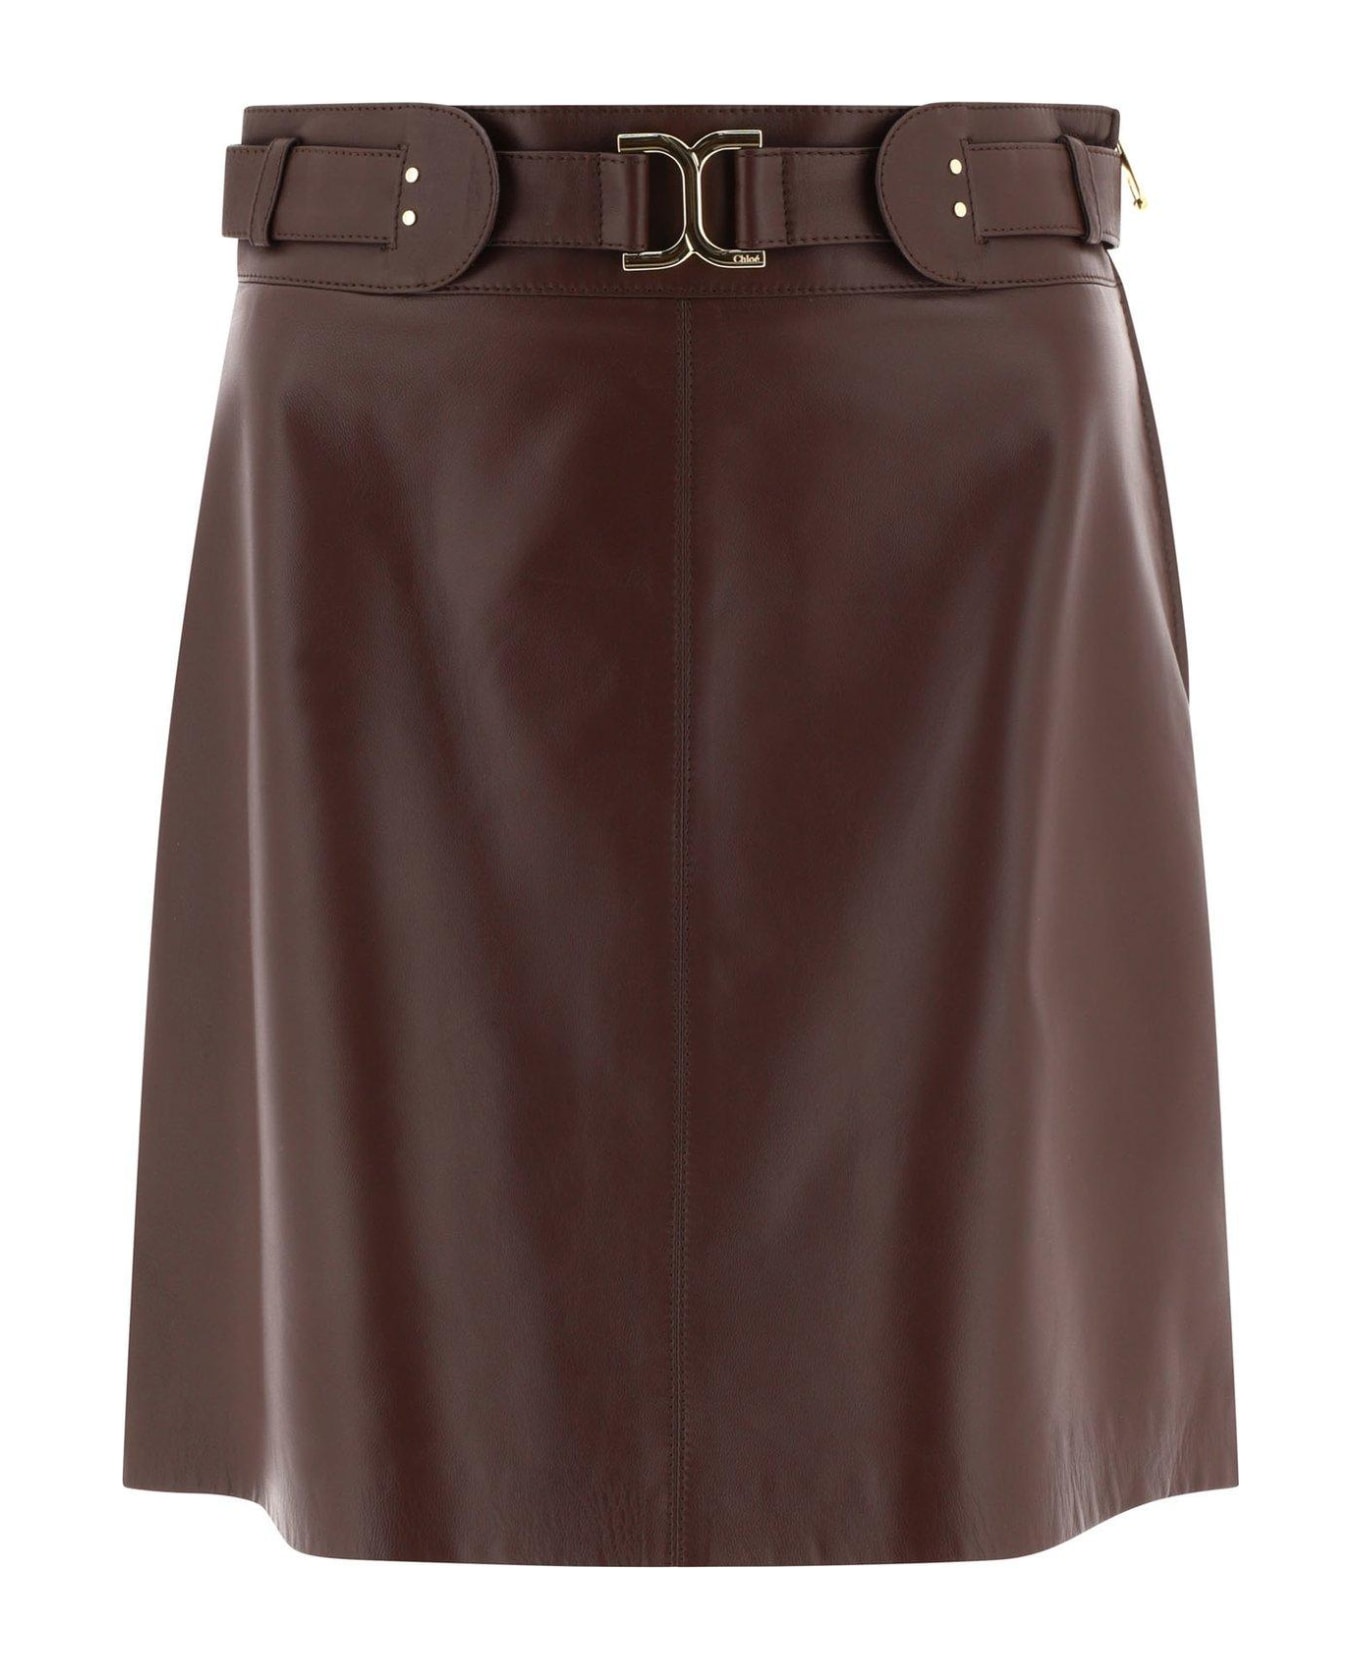 Chloé Leather Mini Skirt - Brown